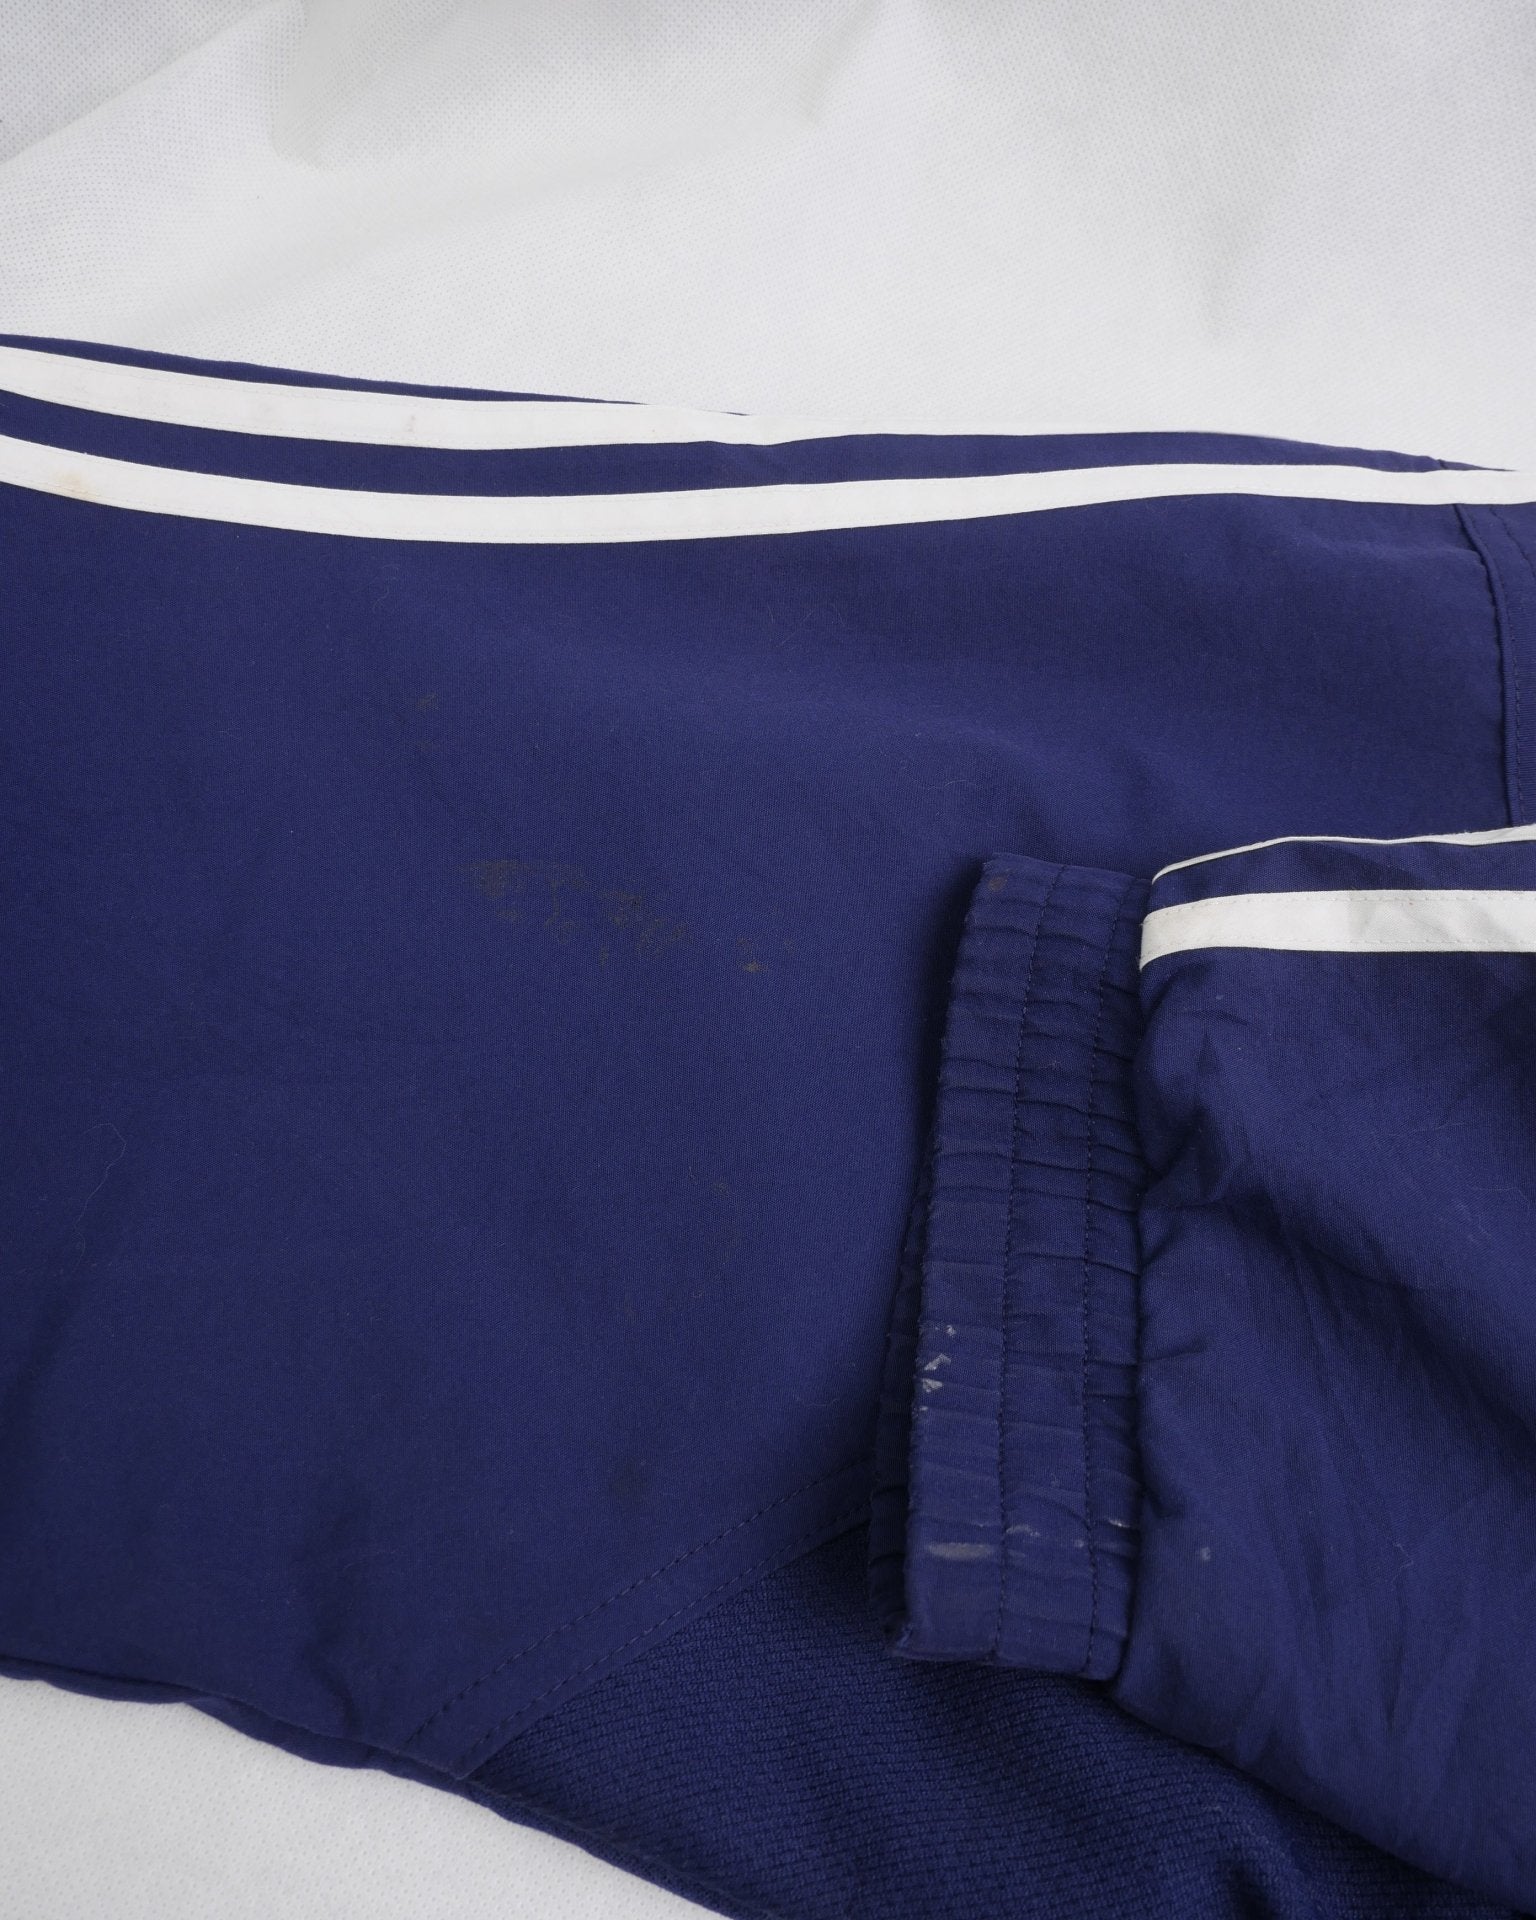 Adidas embroidered Logo navy Track Jacket - Peeces